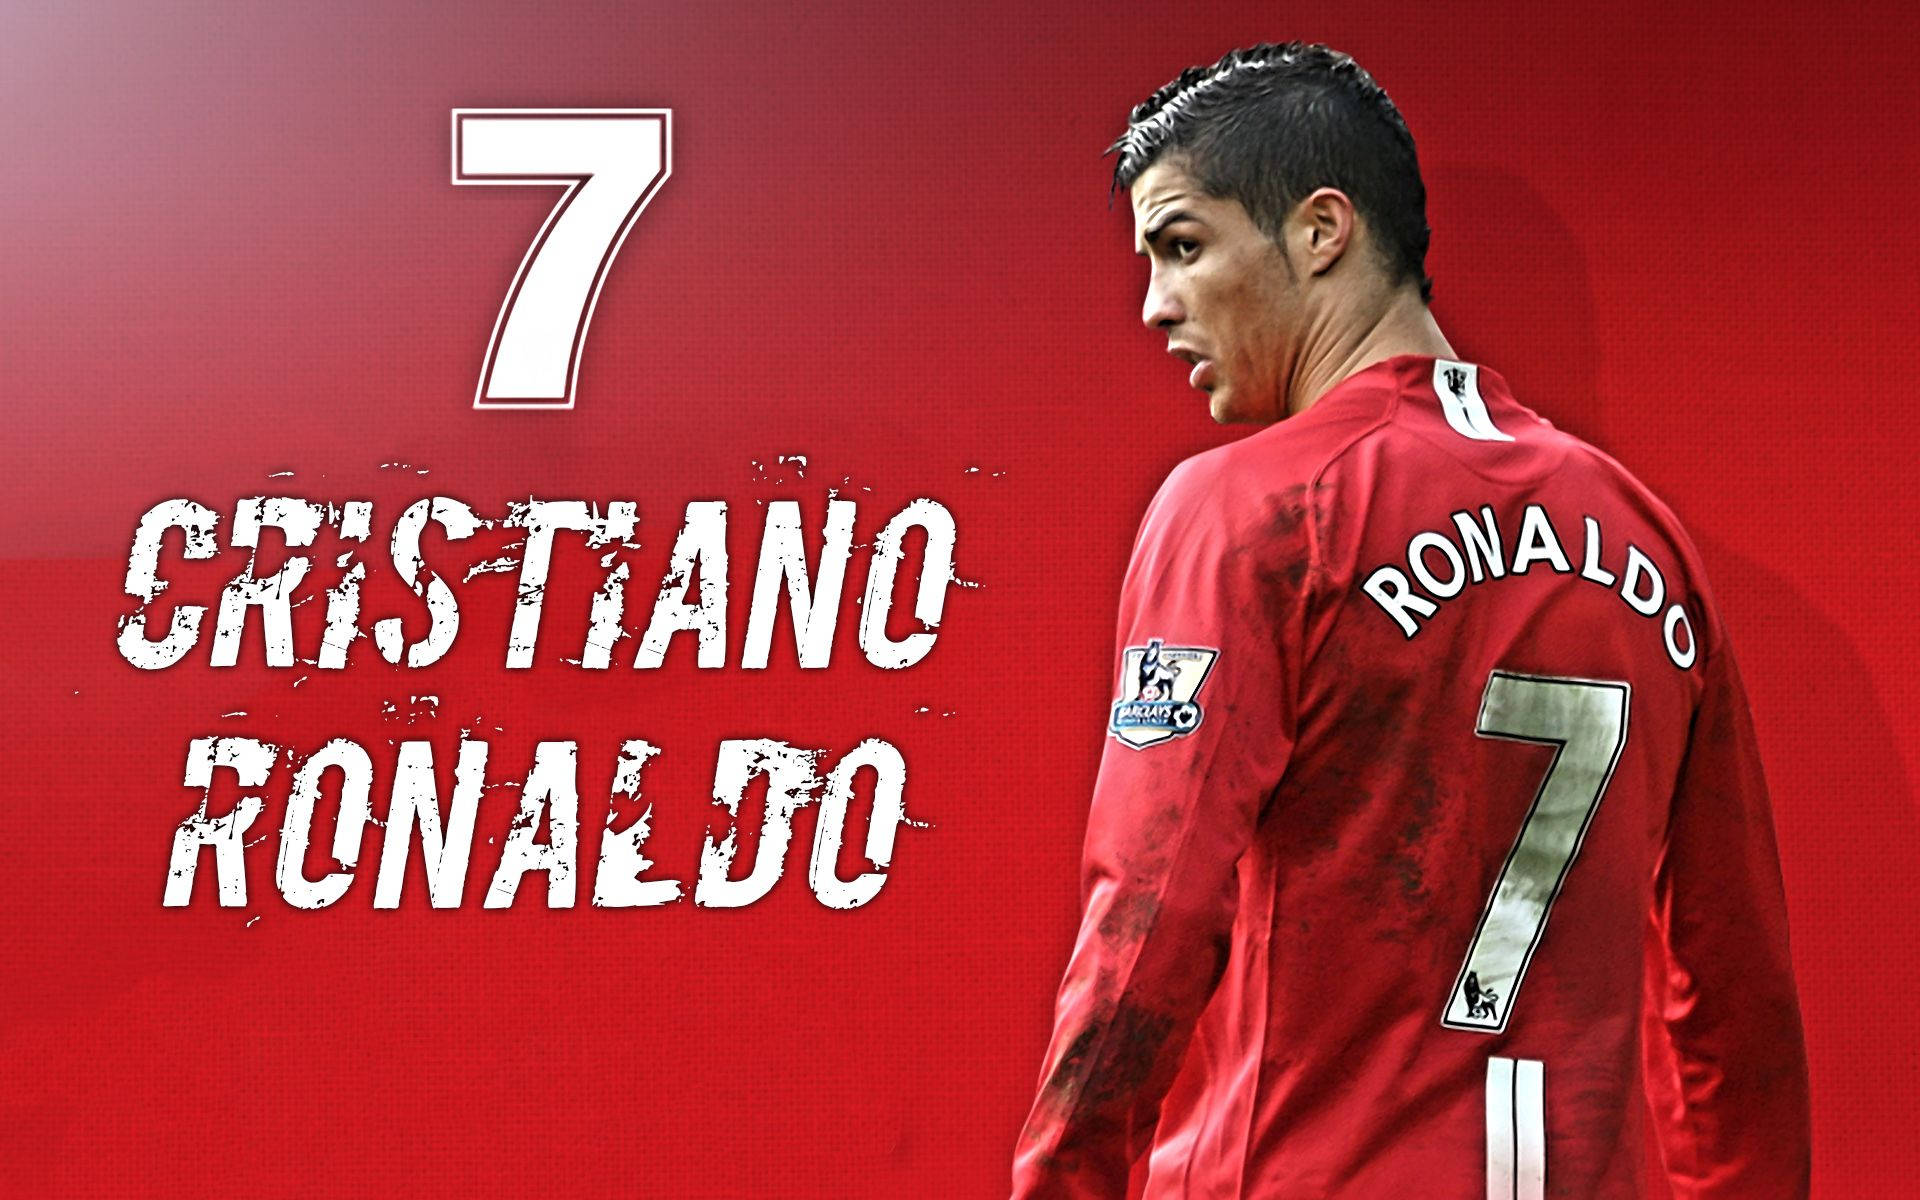 Cristiano Ronaldo Manchester United Number 7 Background